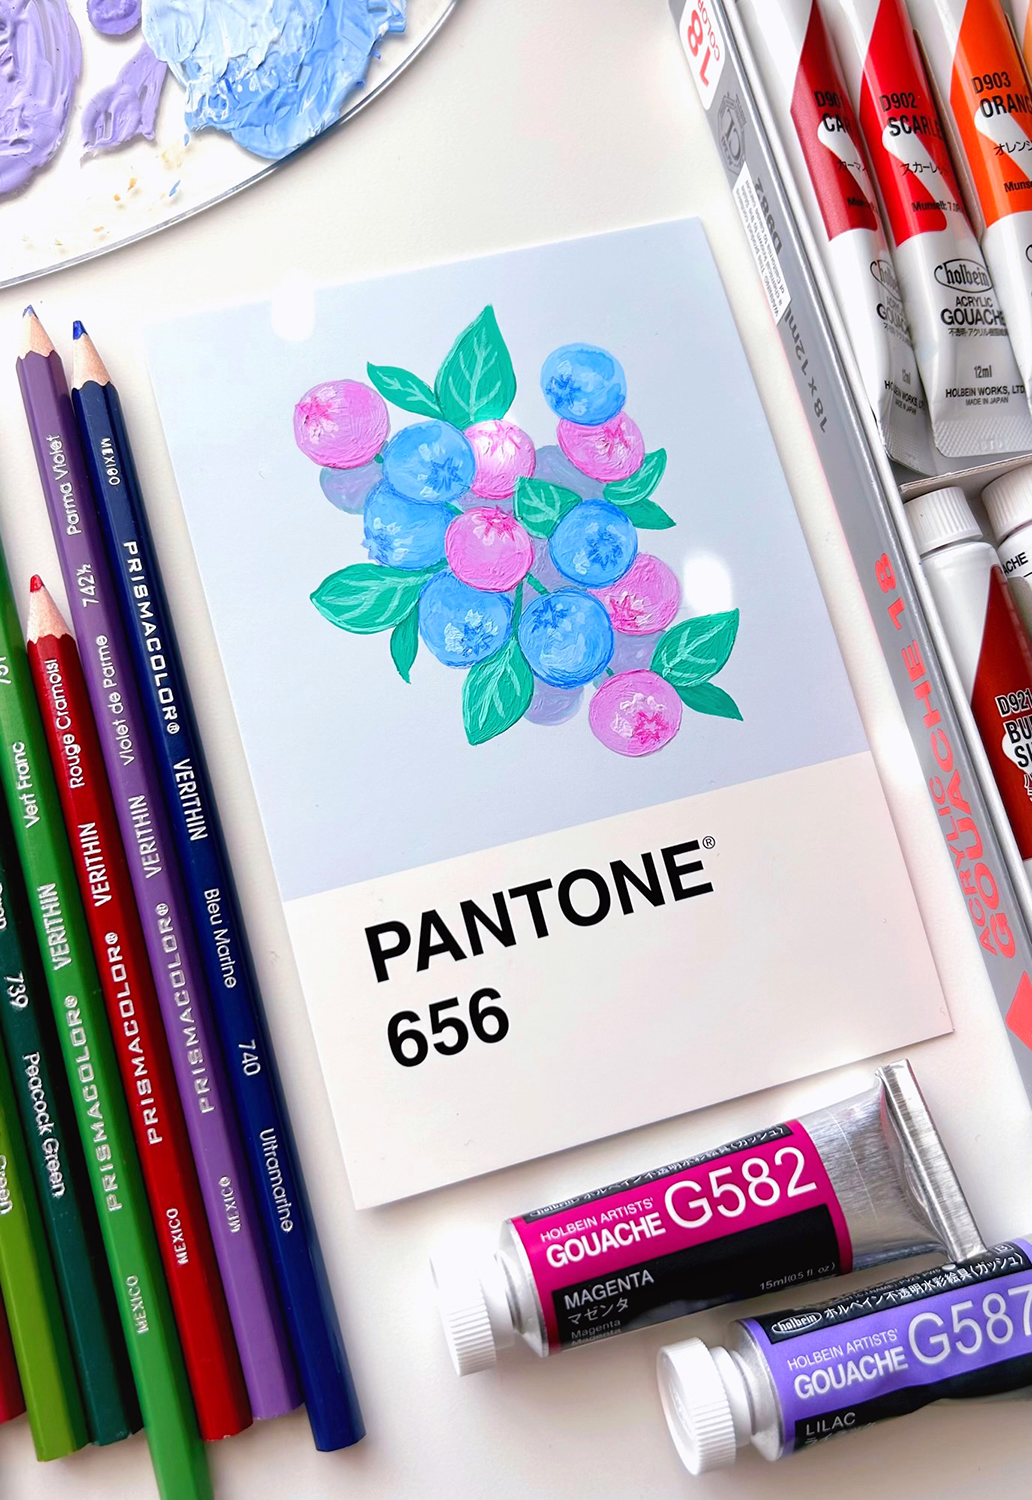 Spring Blueberries” Pantone Postcard Gouache Painting - 4x6in – prismono